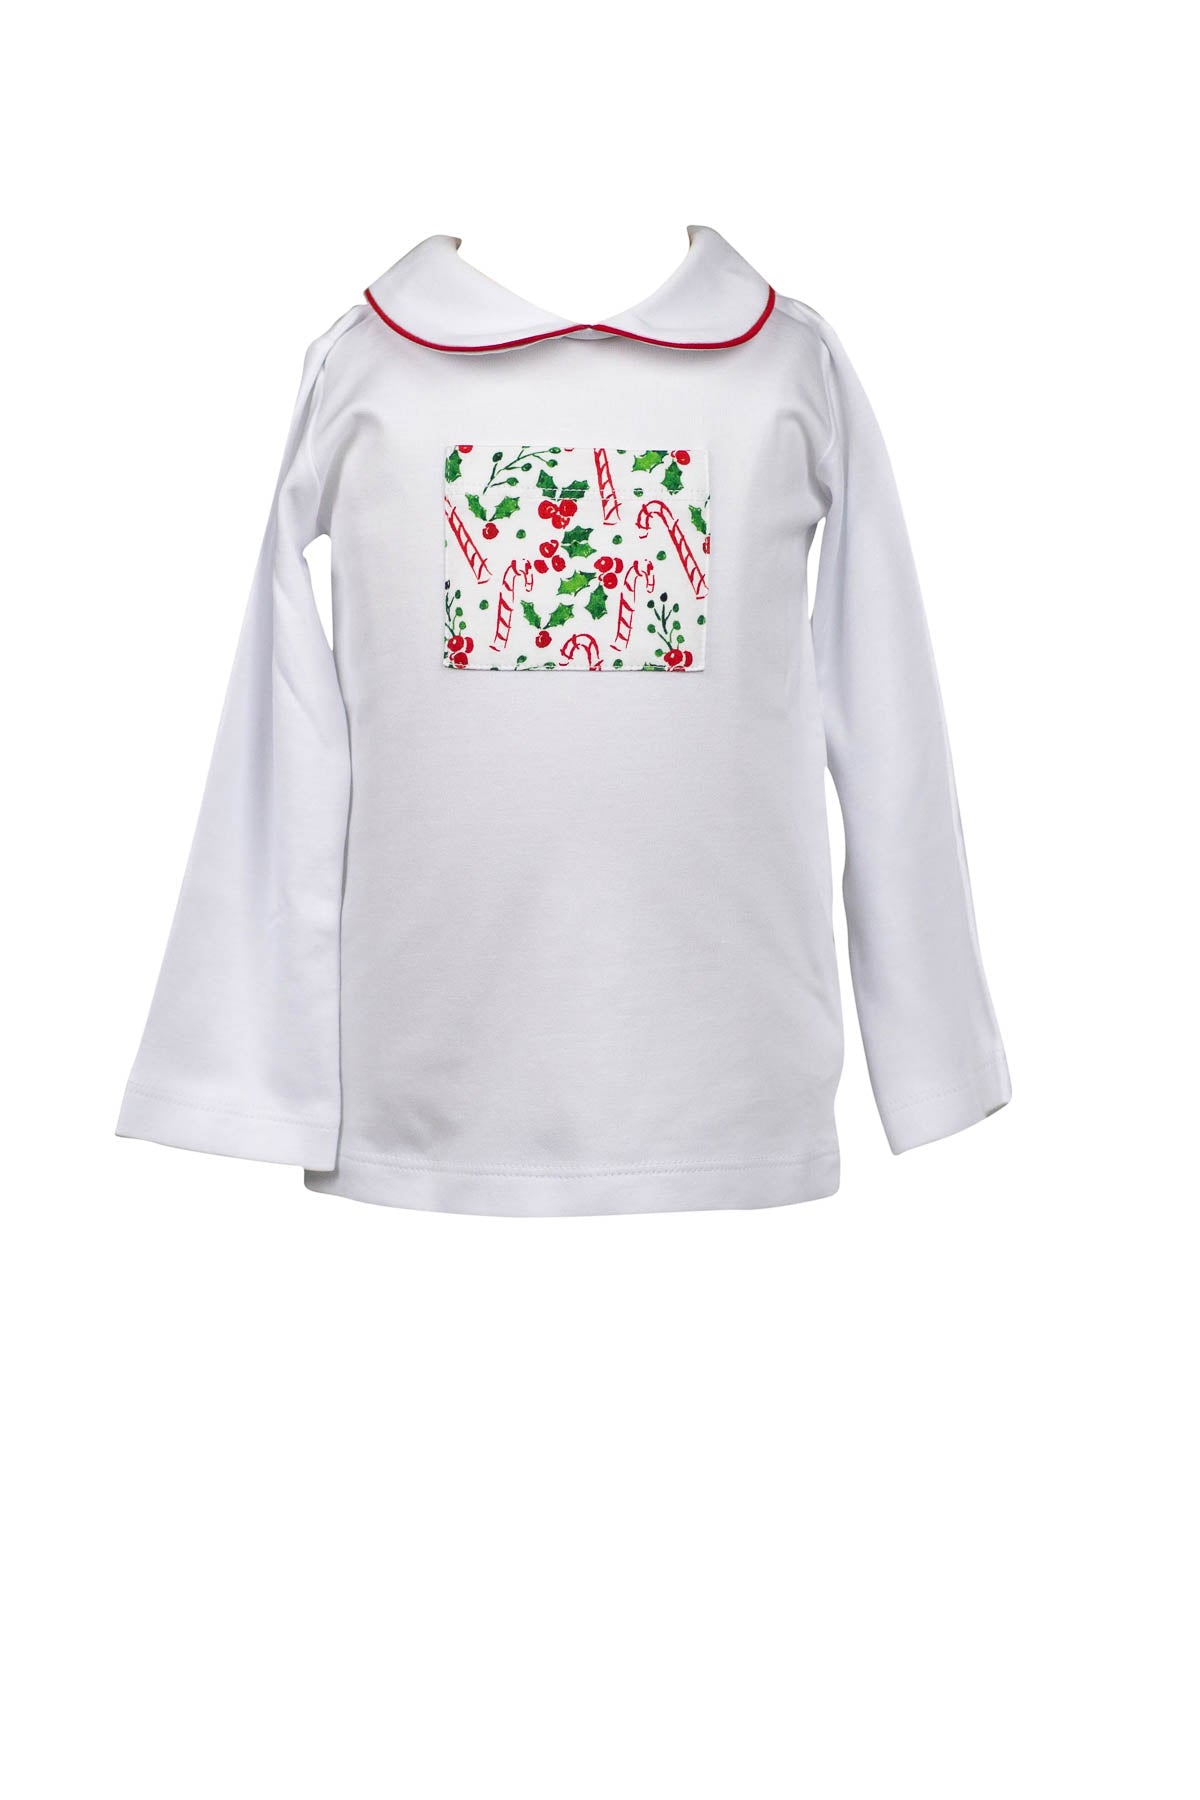 Mistletoe Pima Pocket Shirt (3T,4T)